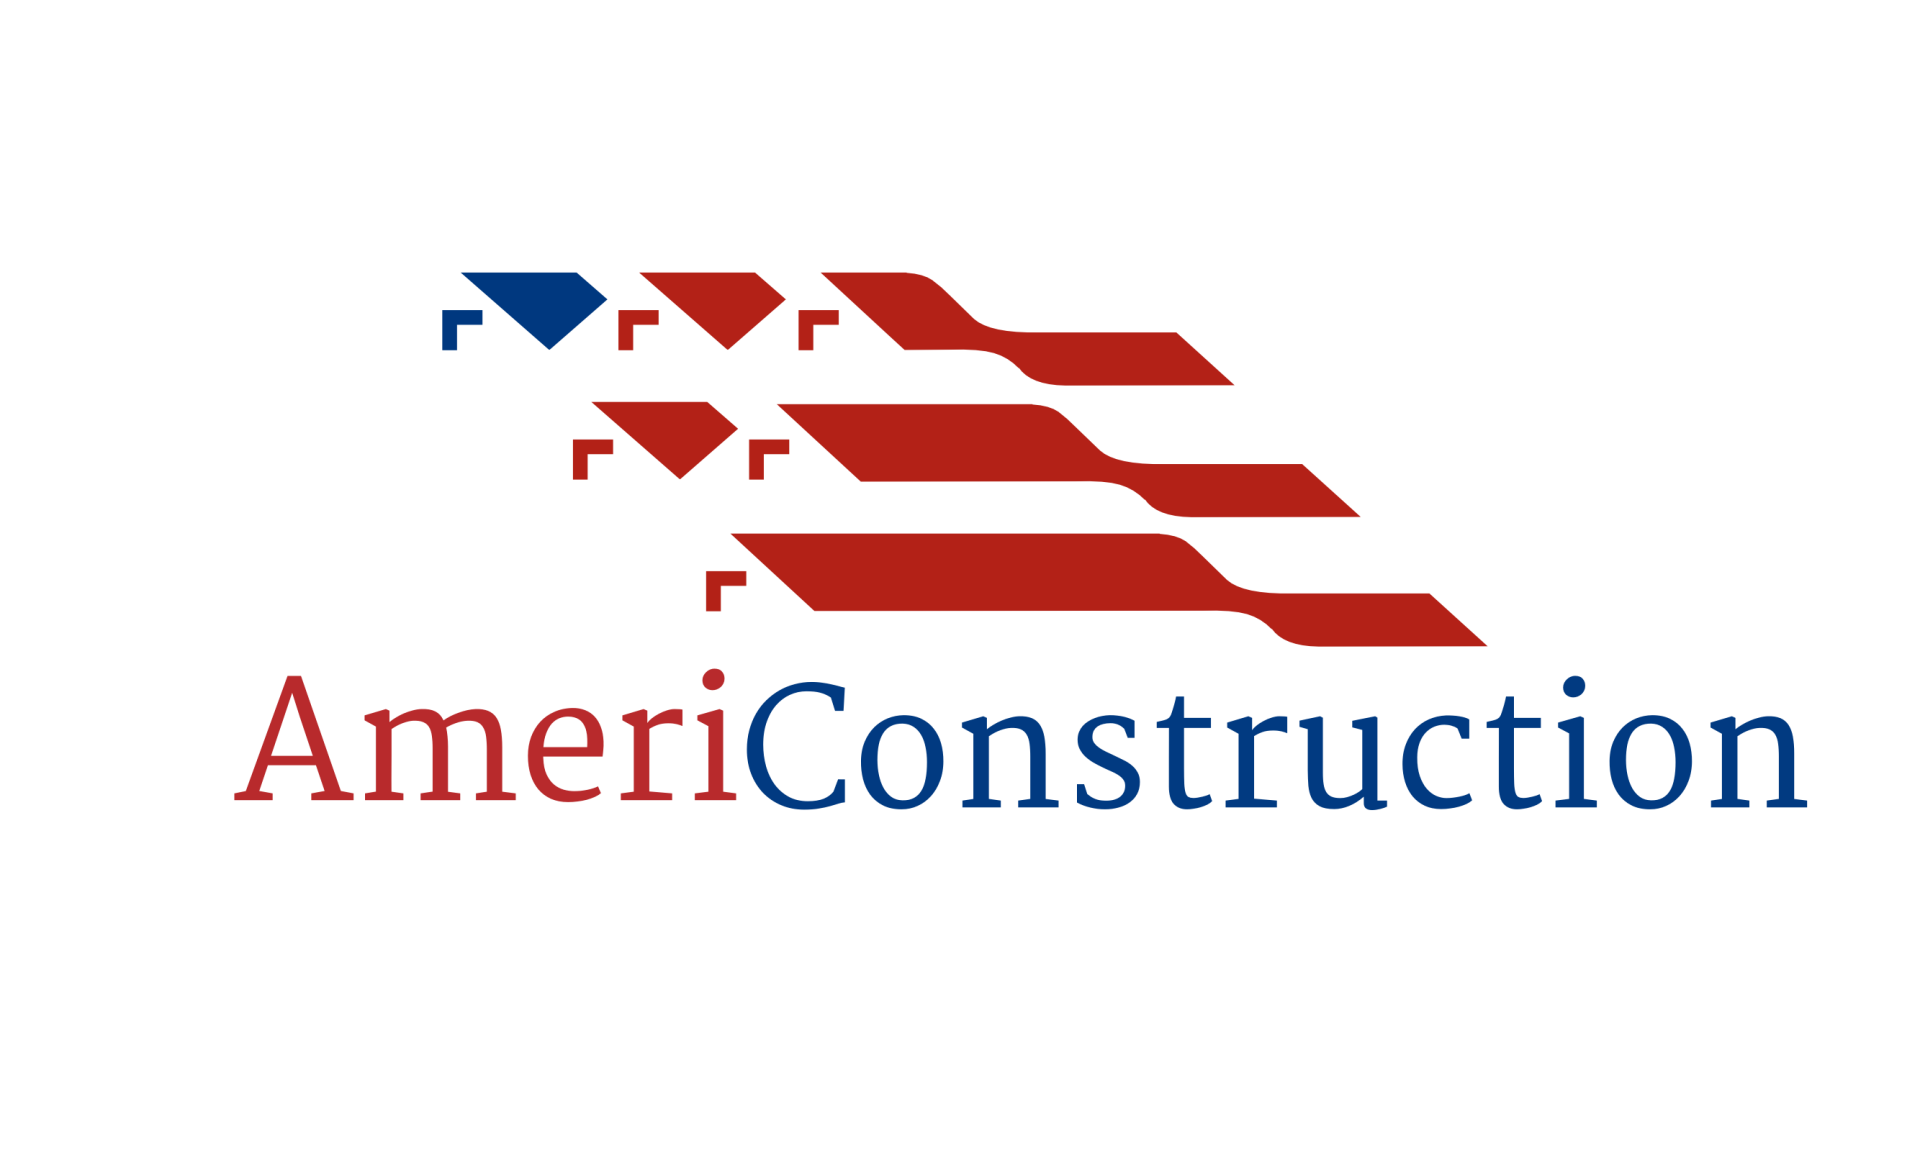 AmeriConstruction LLC